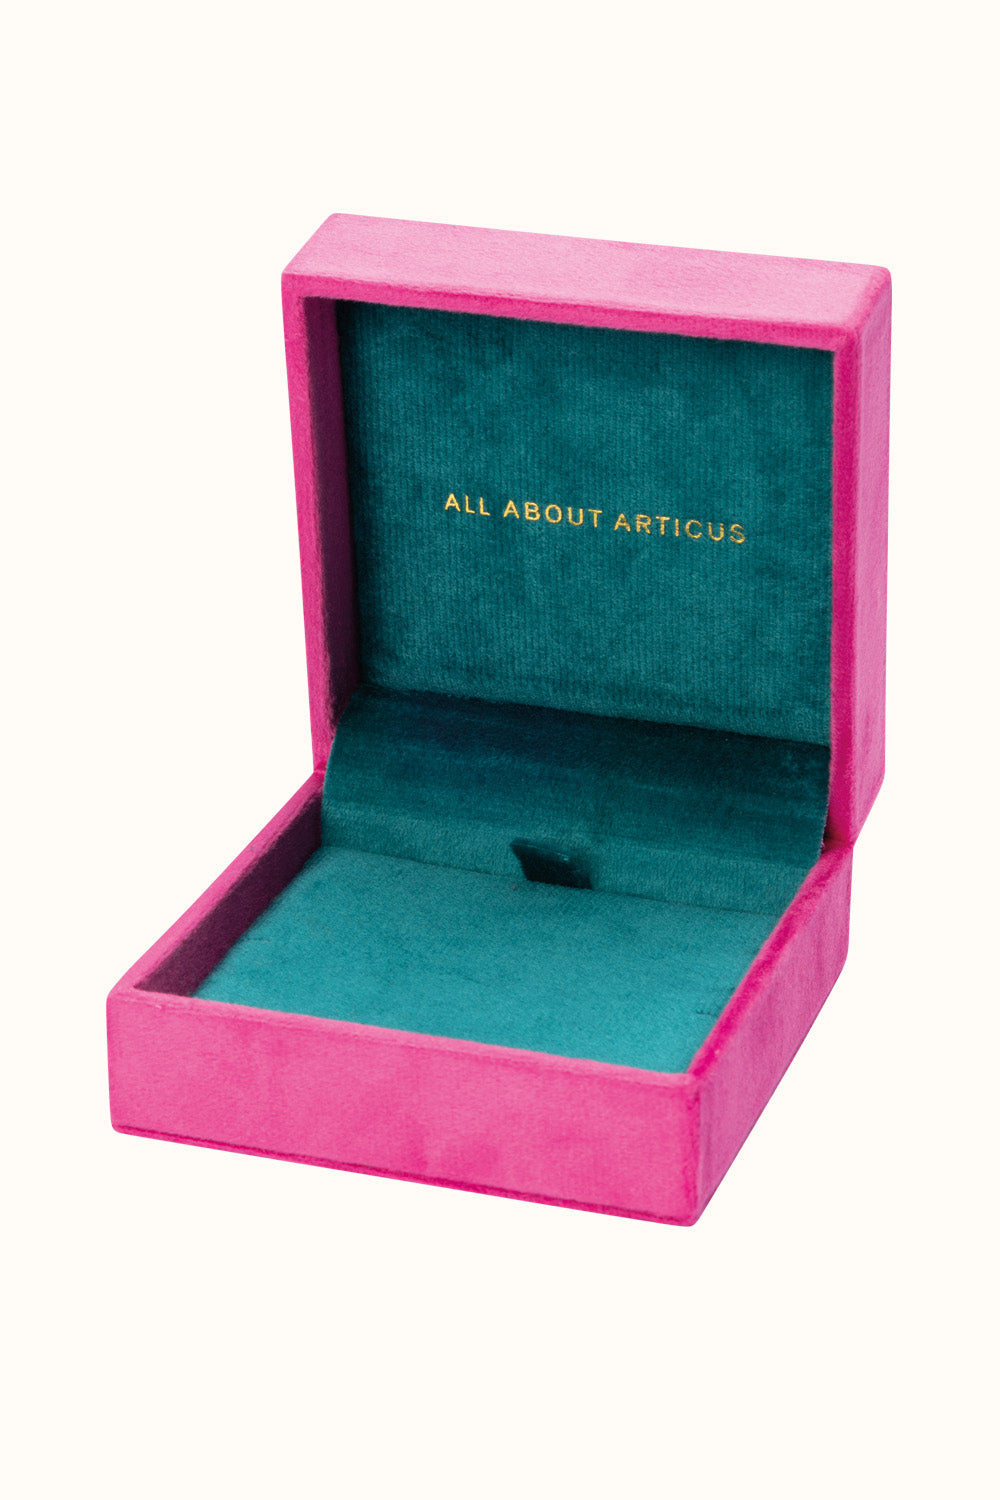 The Pink Jewellery Box